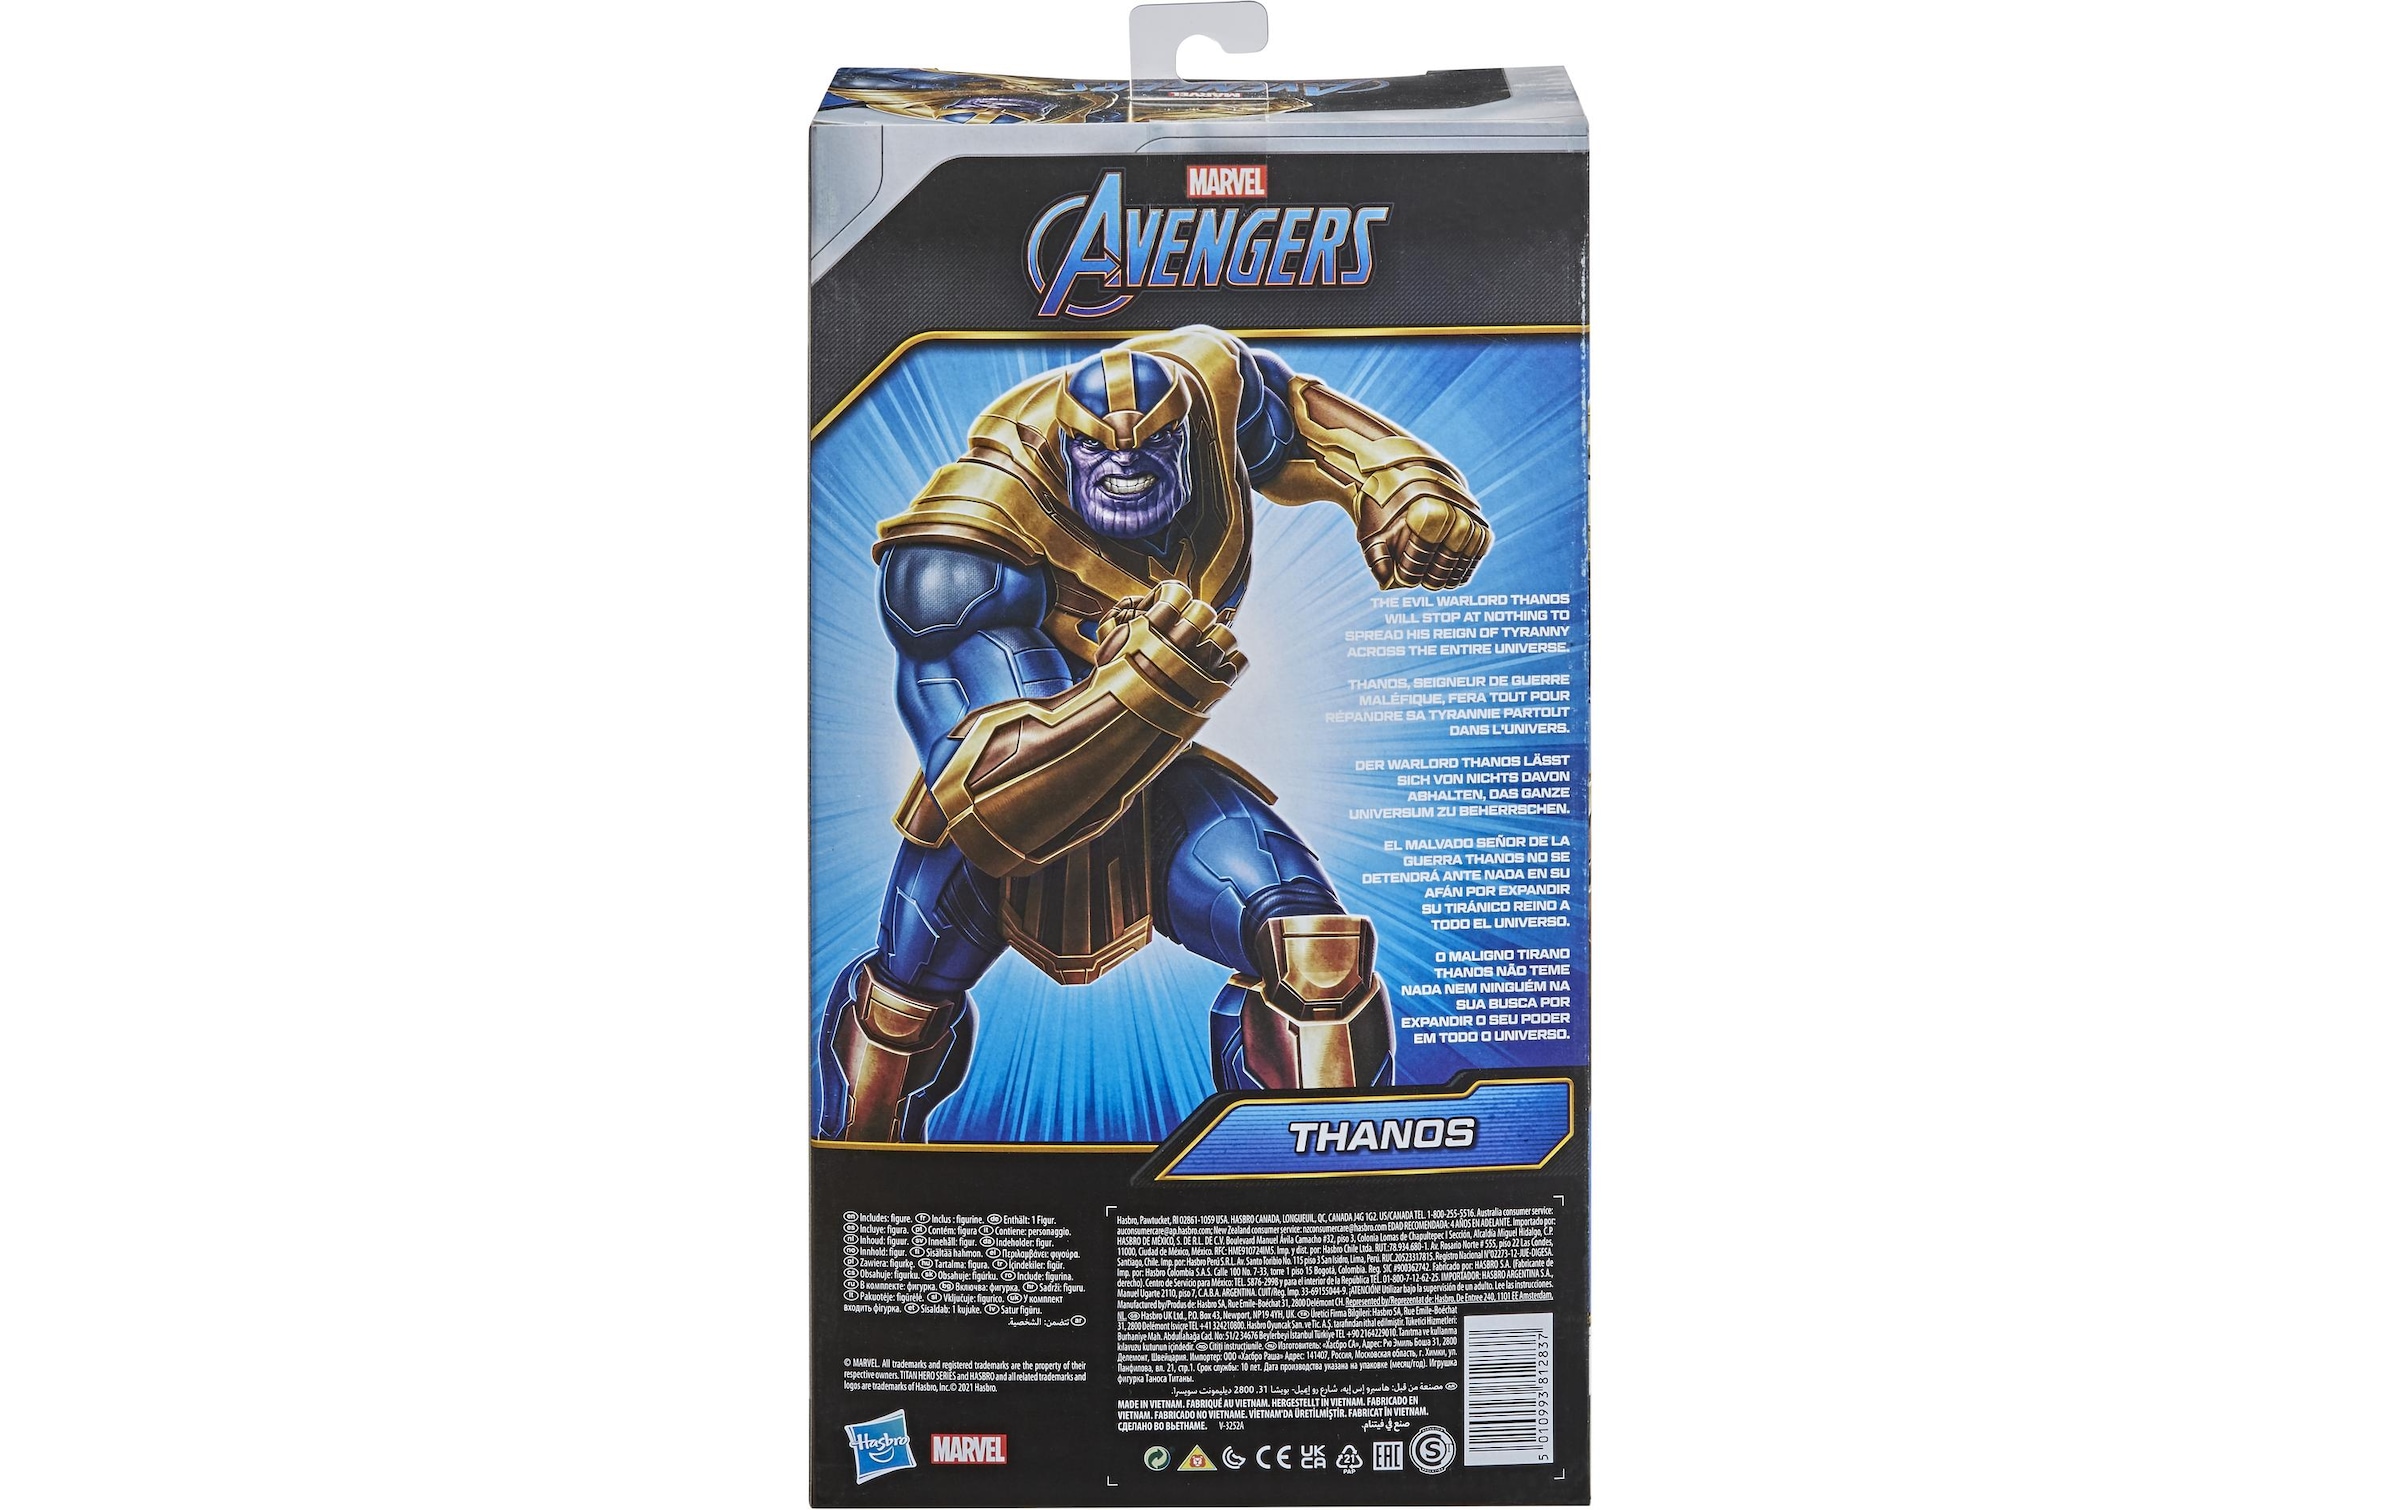 MARVEL Actionfigur »Titan Hero Serier Deluxe Thanos«